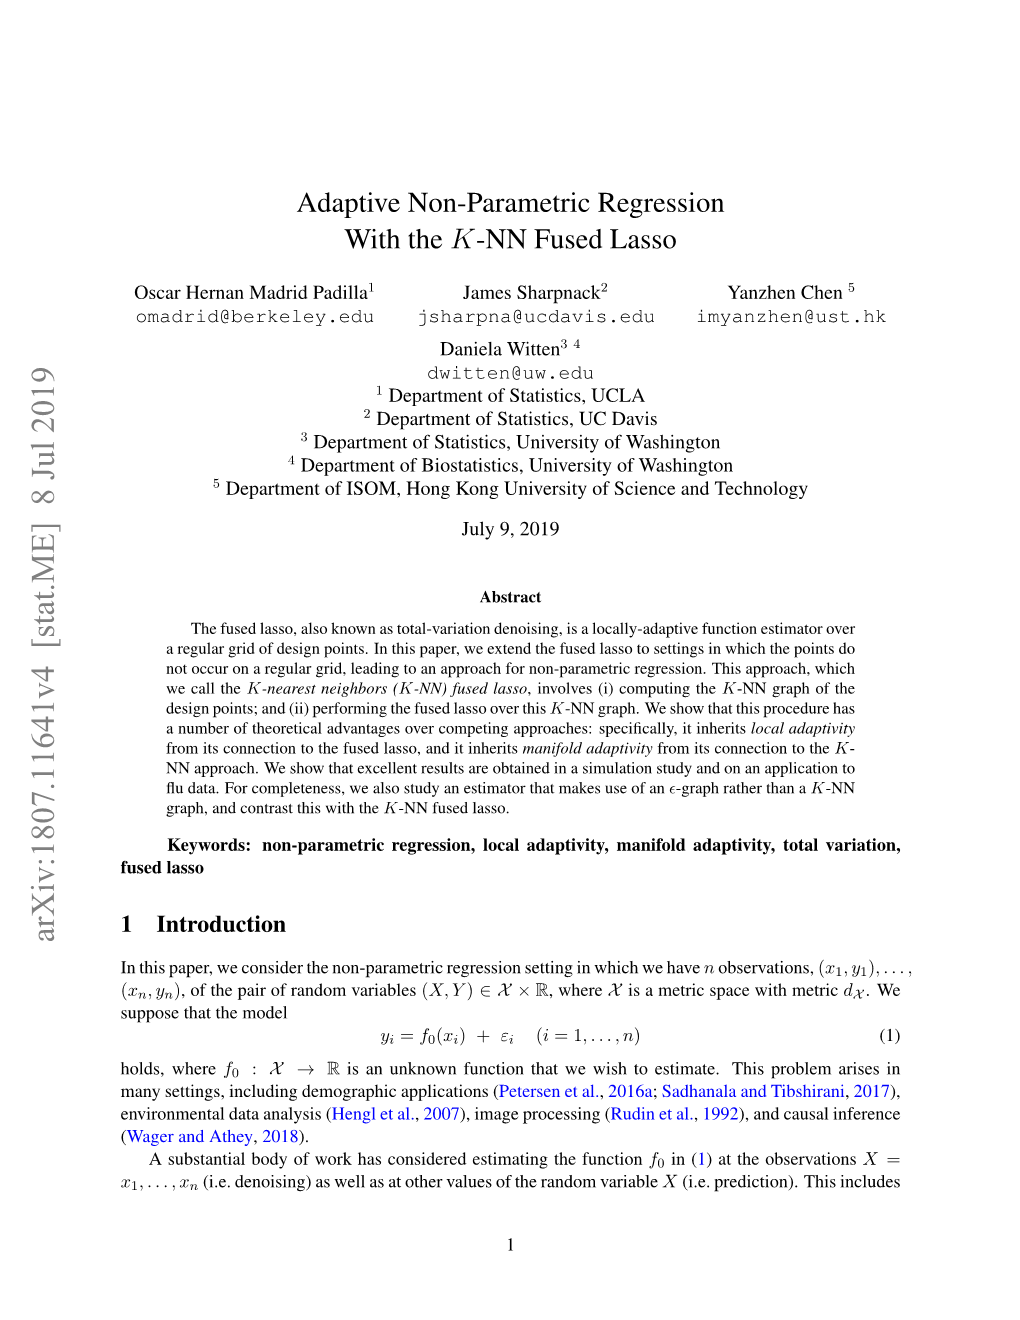 Adaptive Non-Parametric Regression with the $ K $-NN Fused Lasso